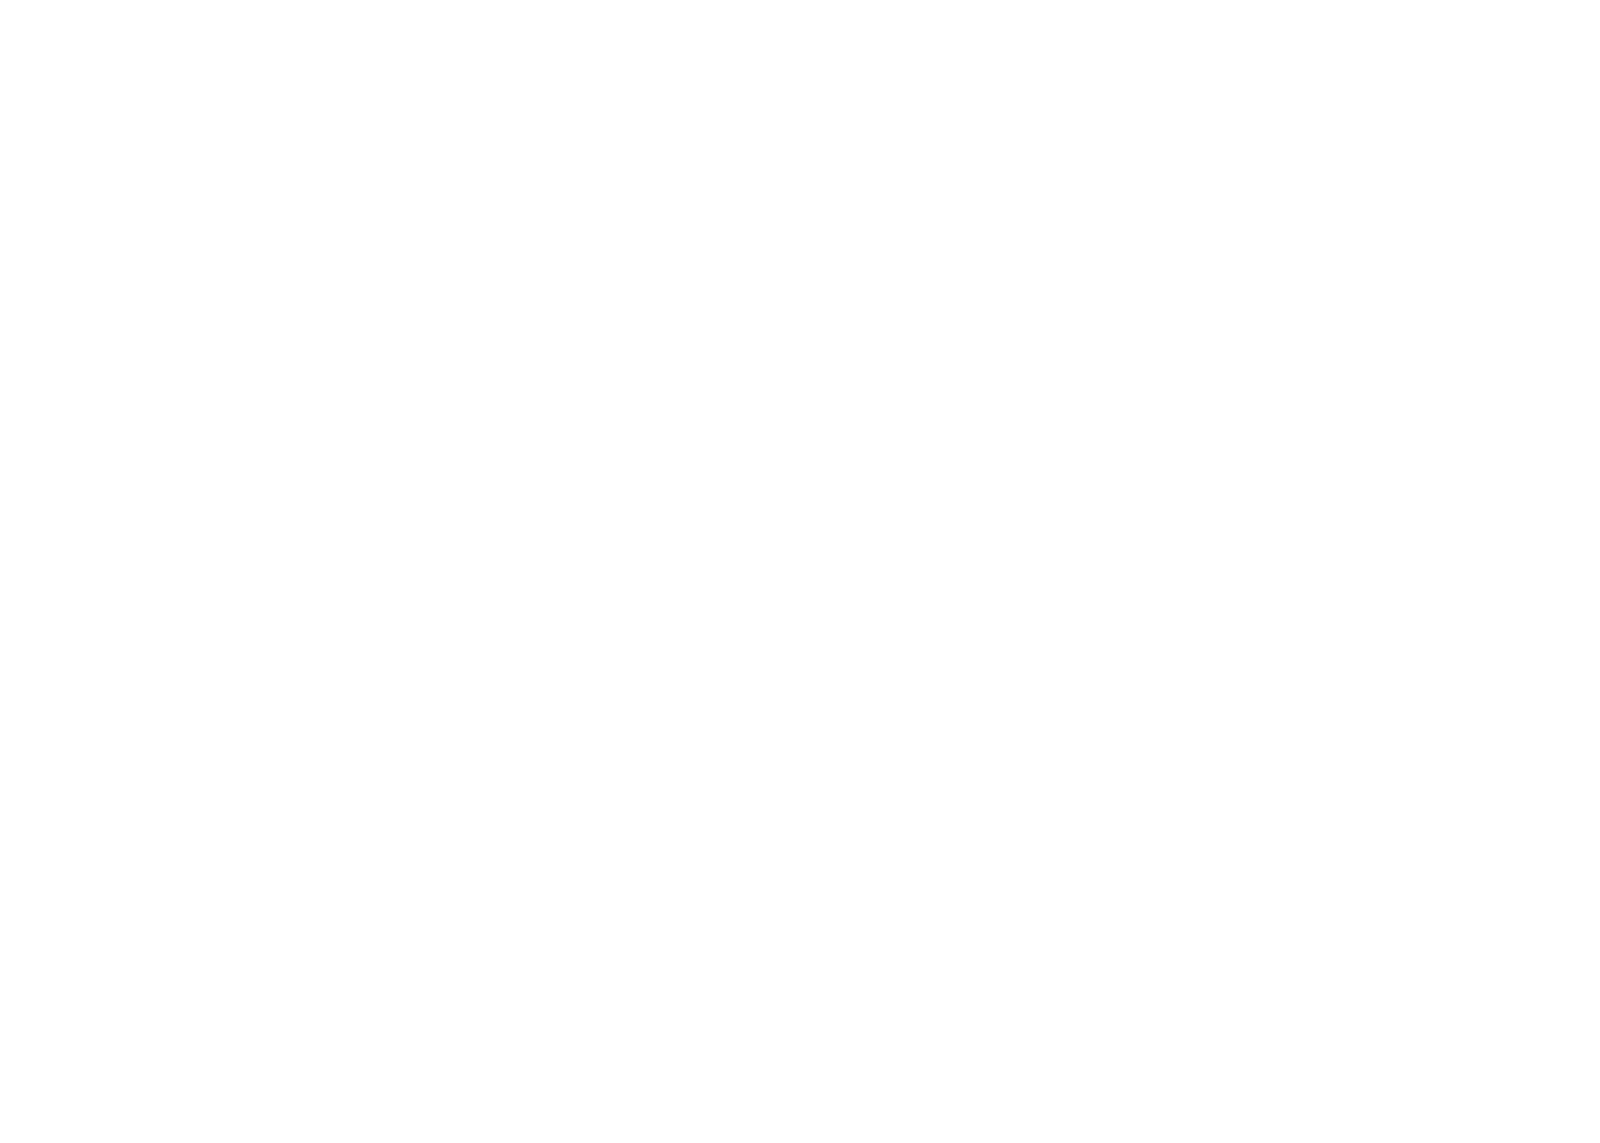 Wedding.com Logo - The Big Fake Wedding bridal show alternative in the form of a